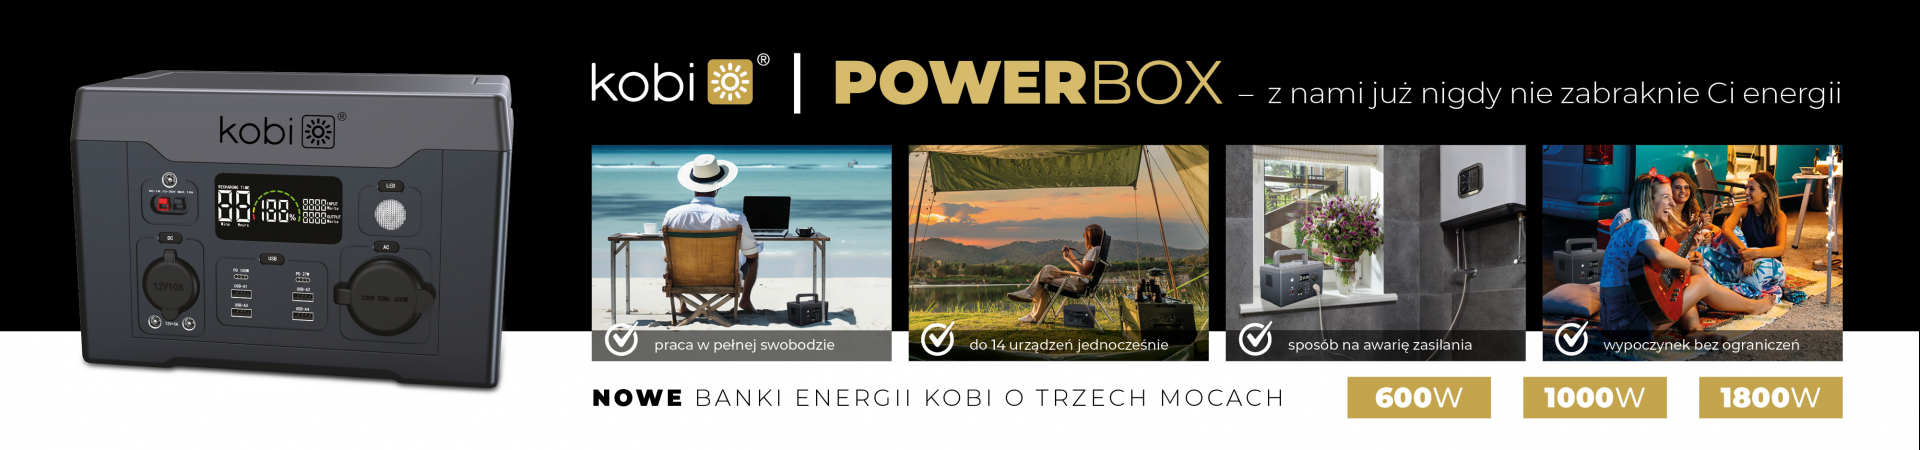 Powerbox.pl